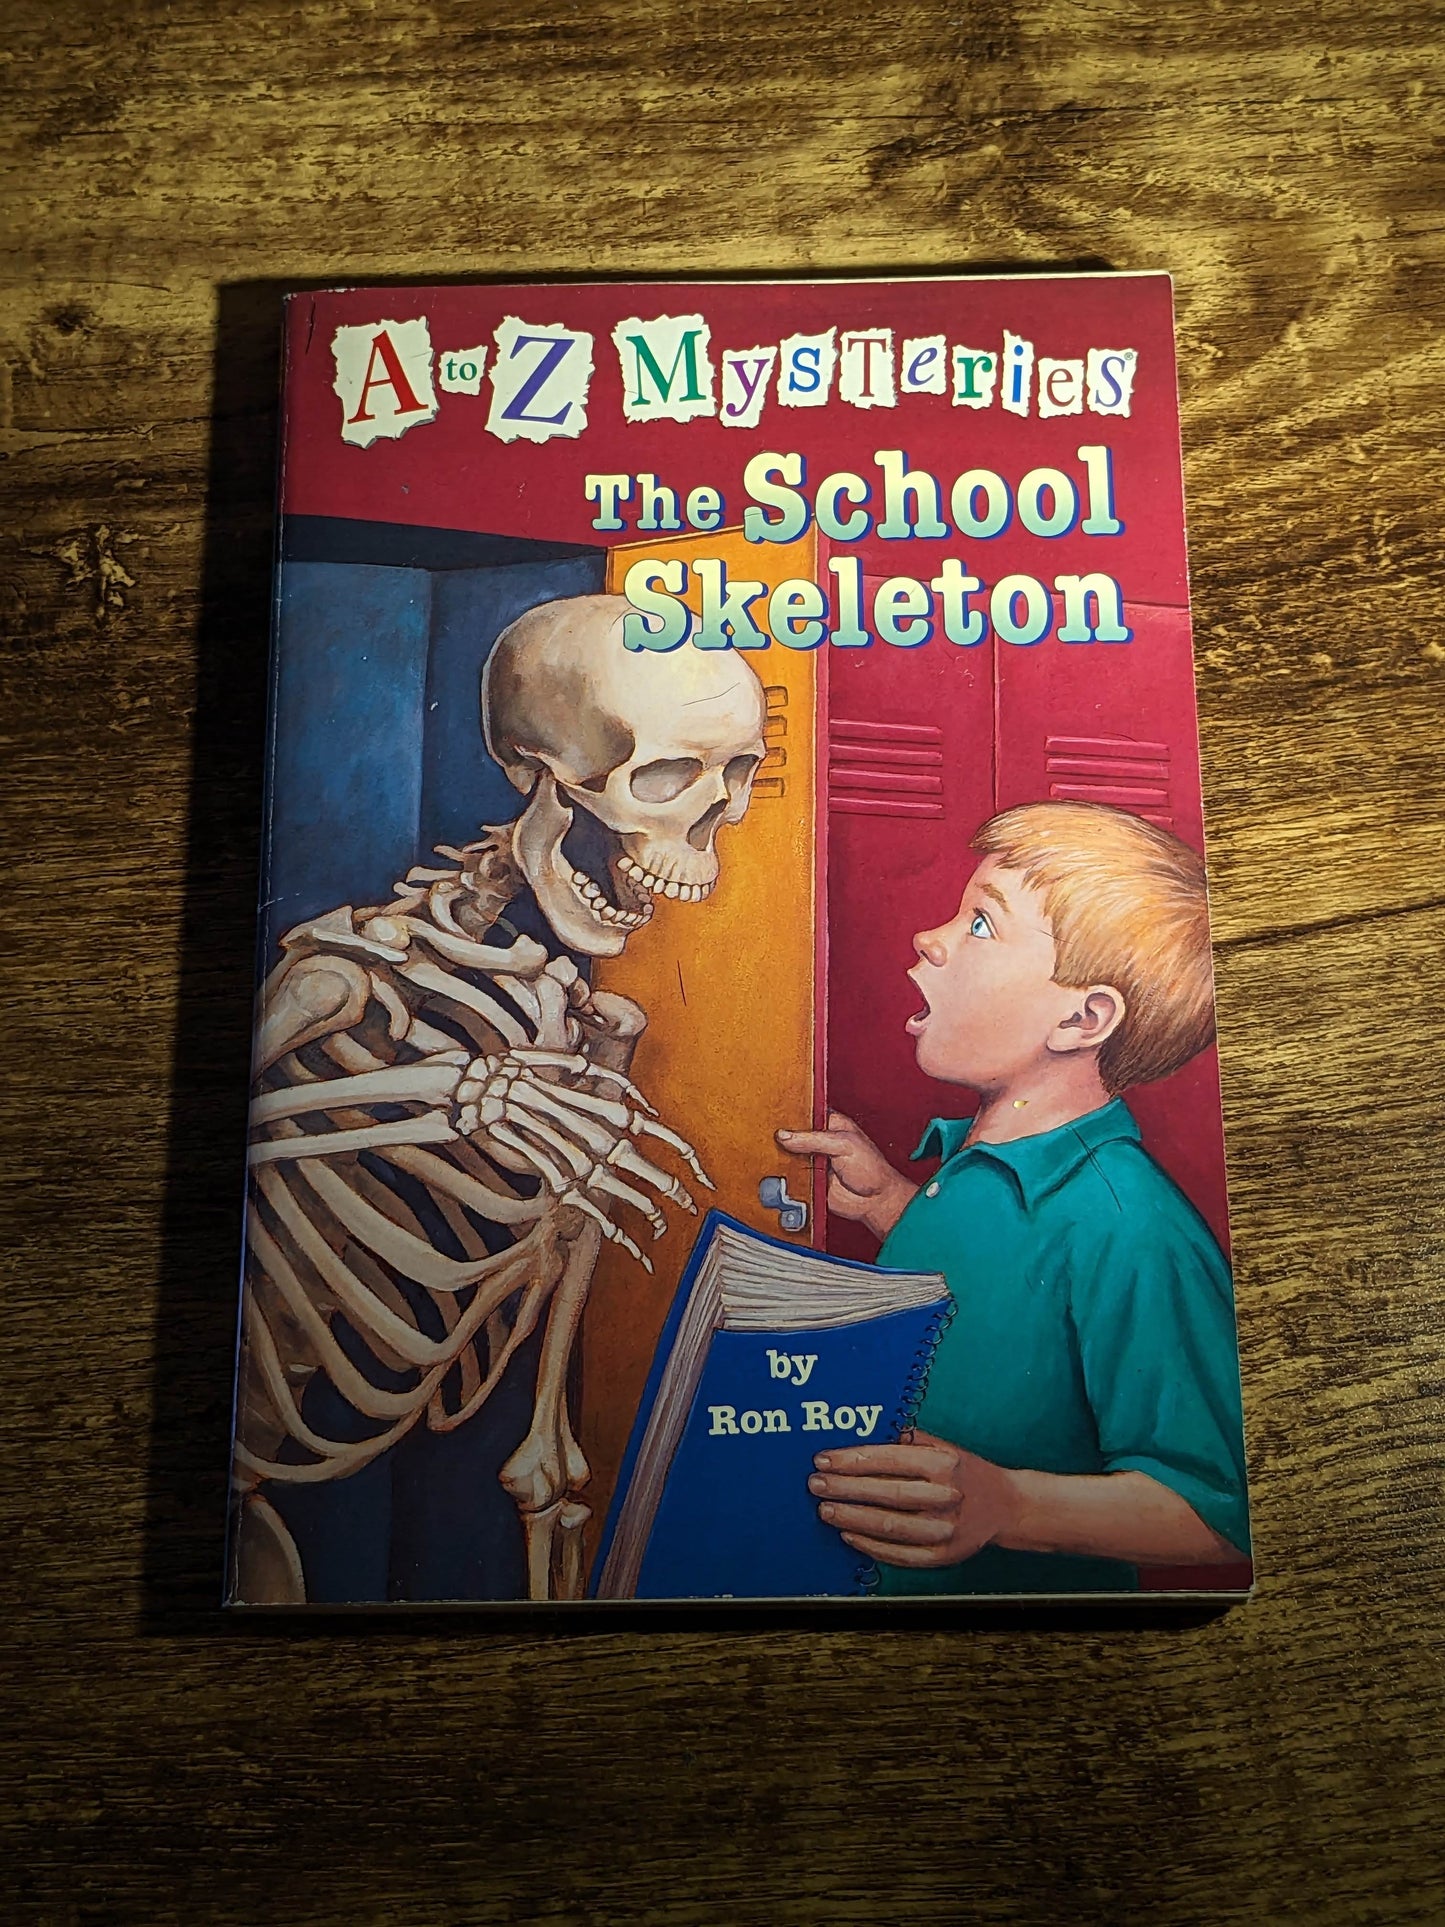 School Skeleton, The (A to Z Mysteries) by Ron Roy - Asylum Books